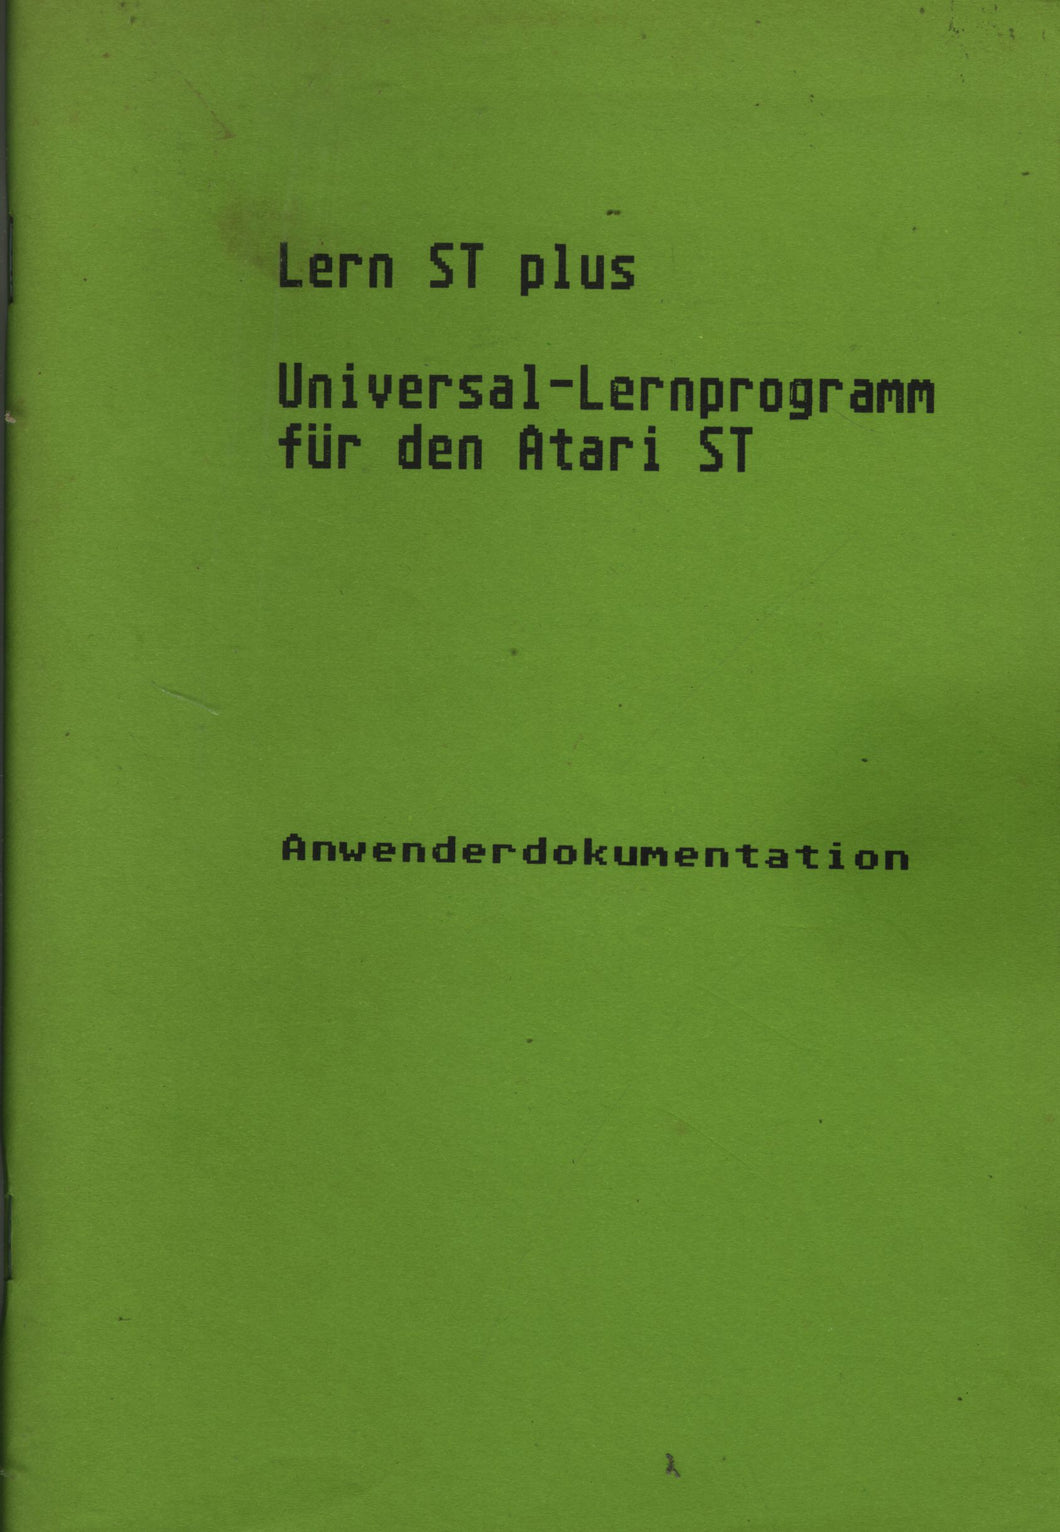 Lern ST plus Handbuch